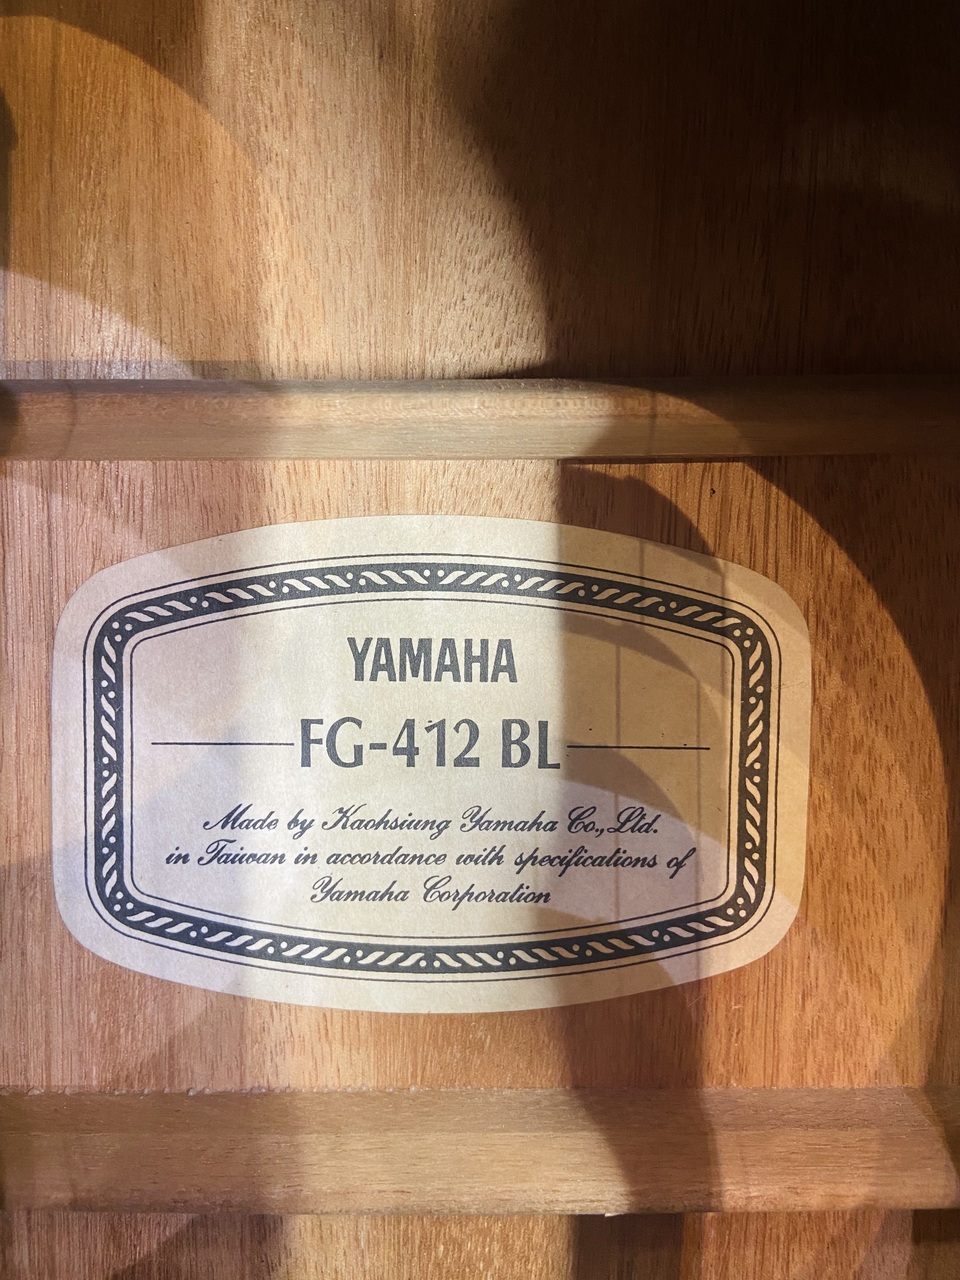 YAMAHA. FG-412BL